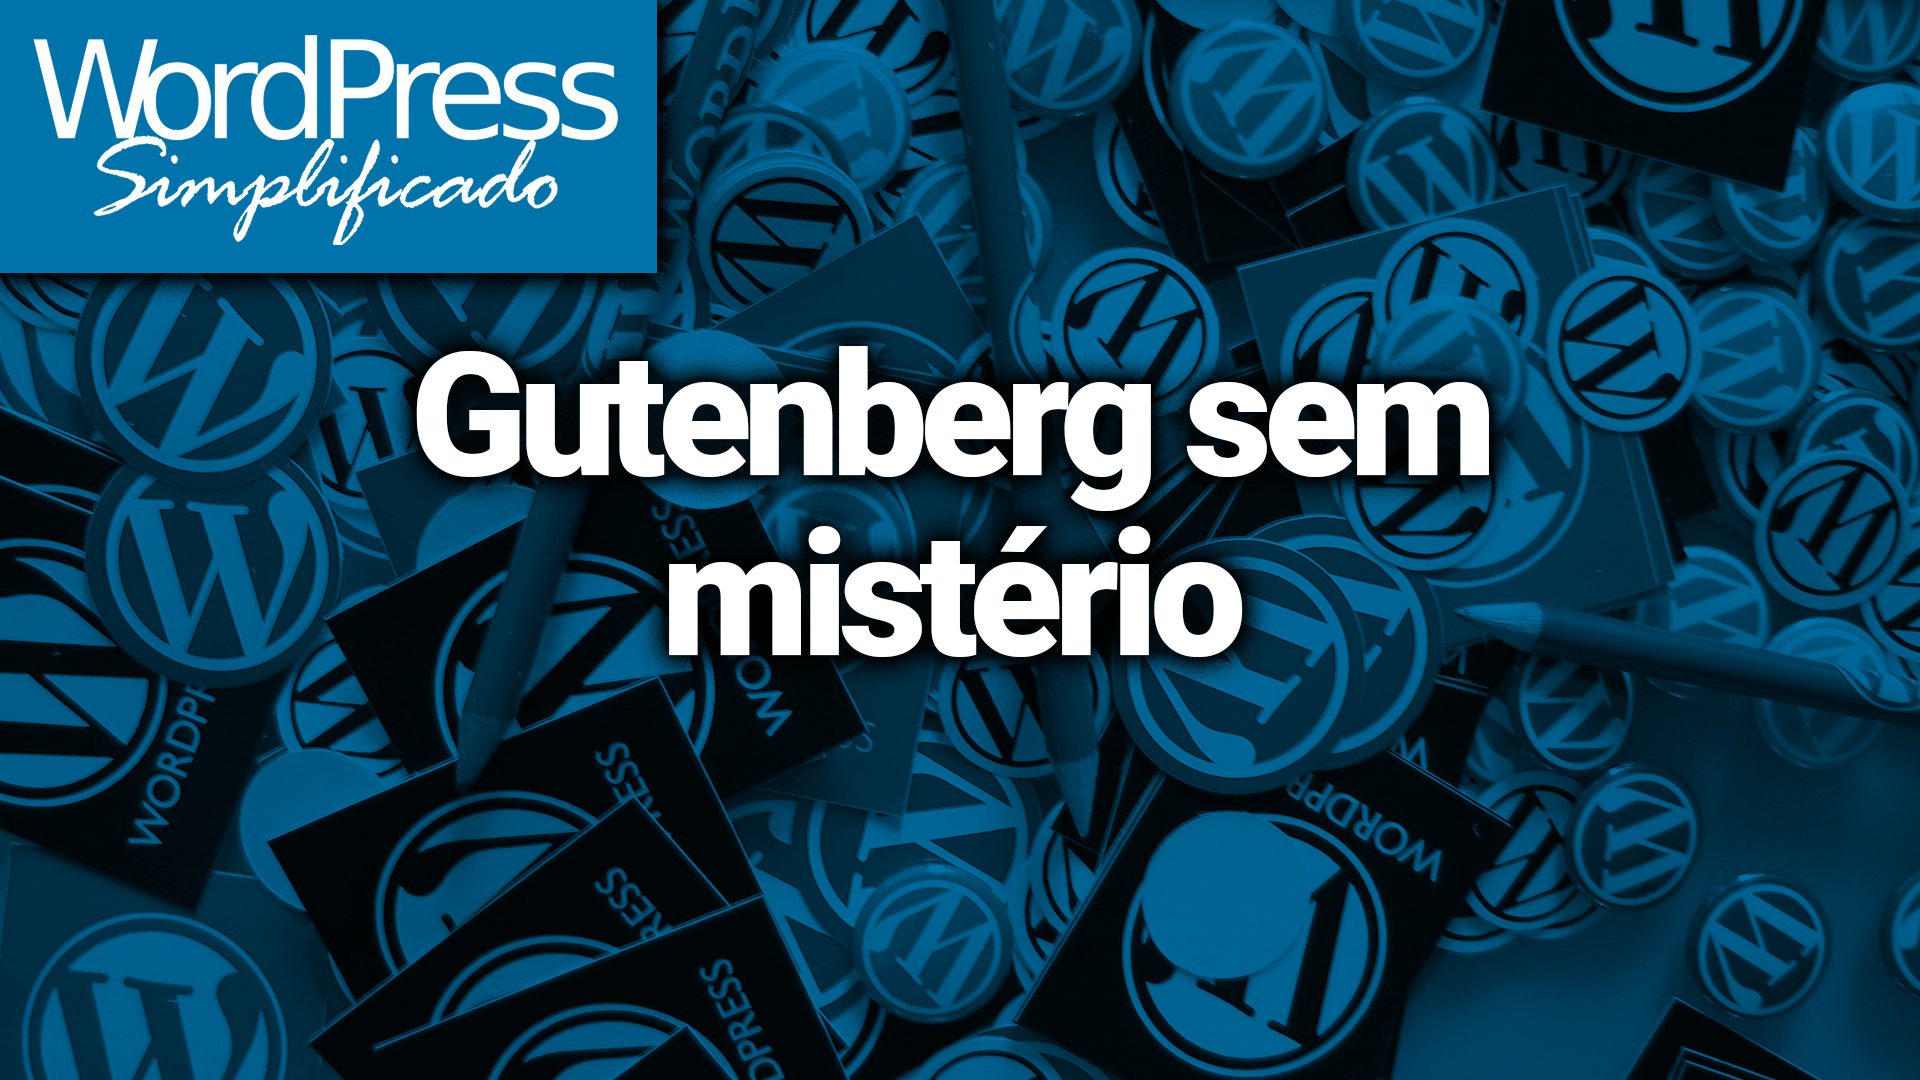 Gutenberg sem mistério